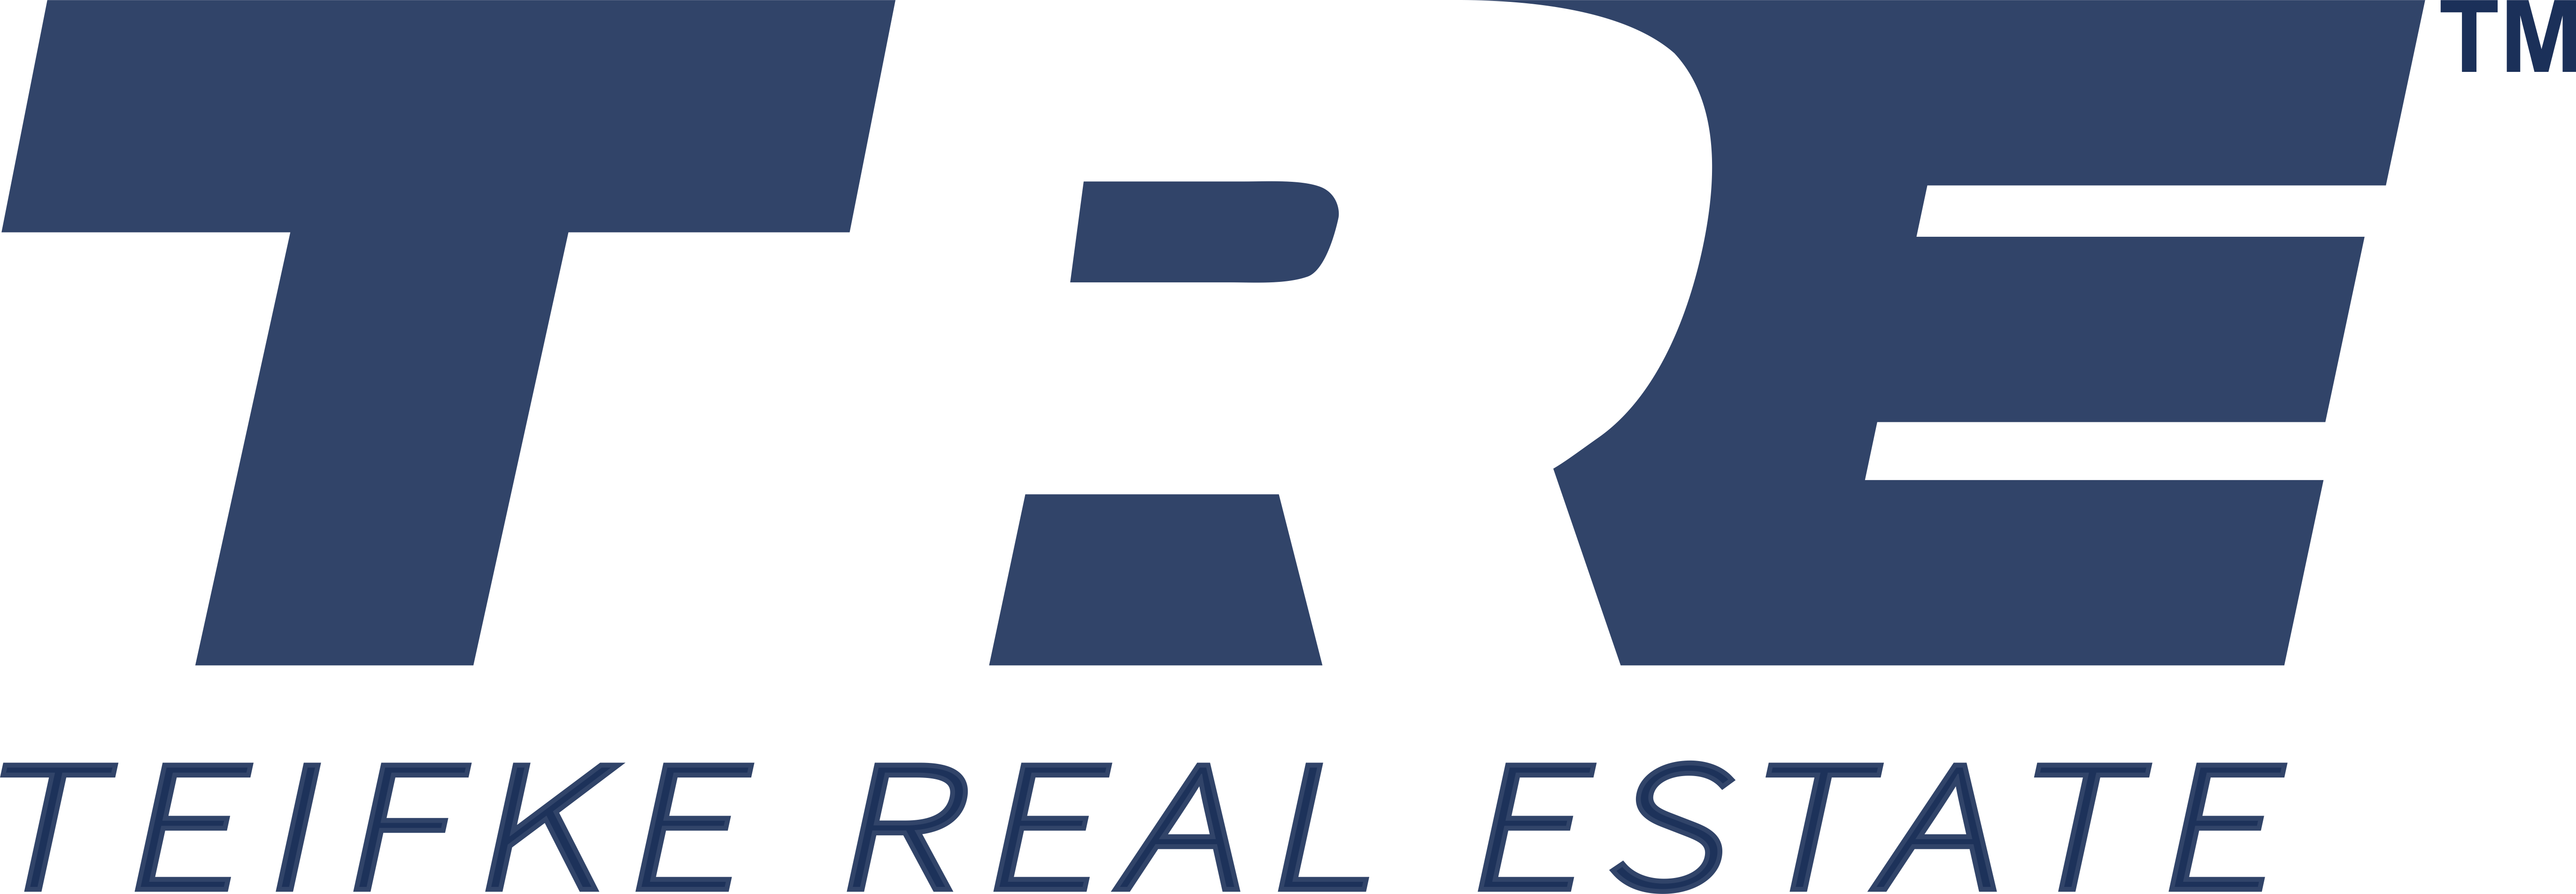 teifke real estate logo blue